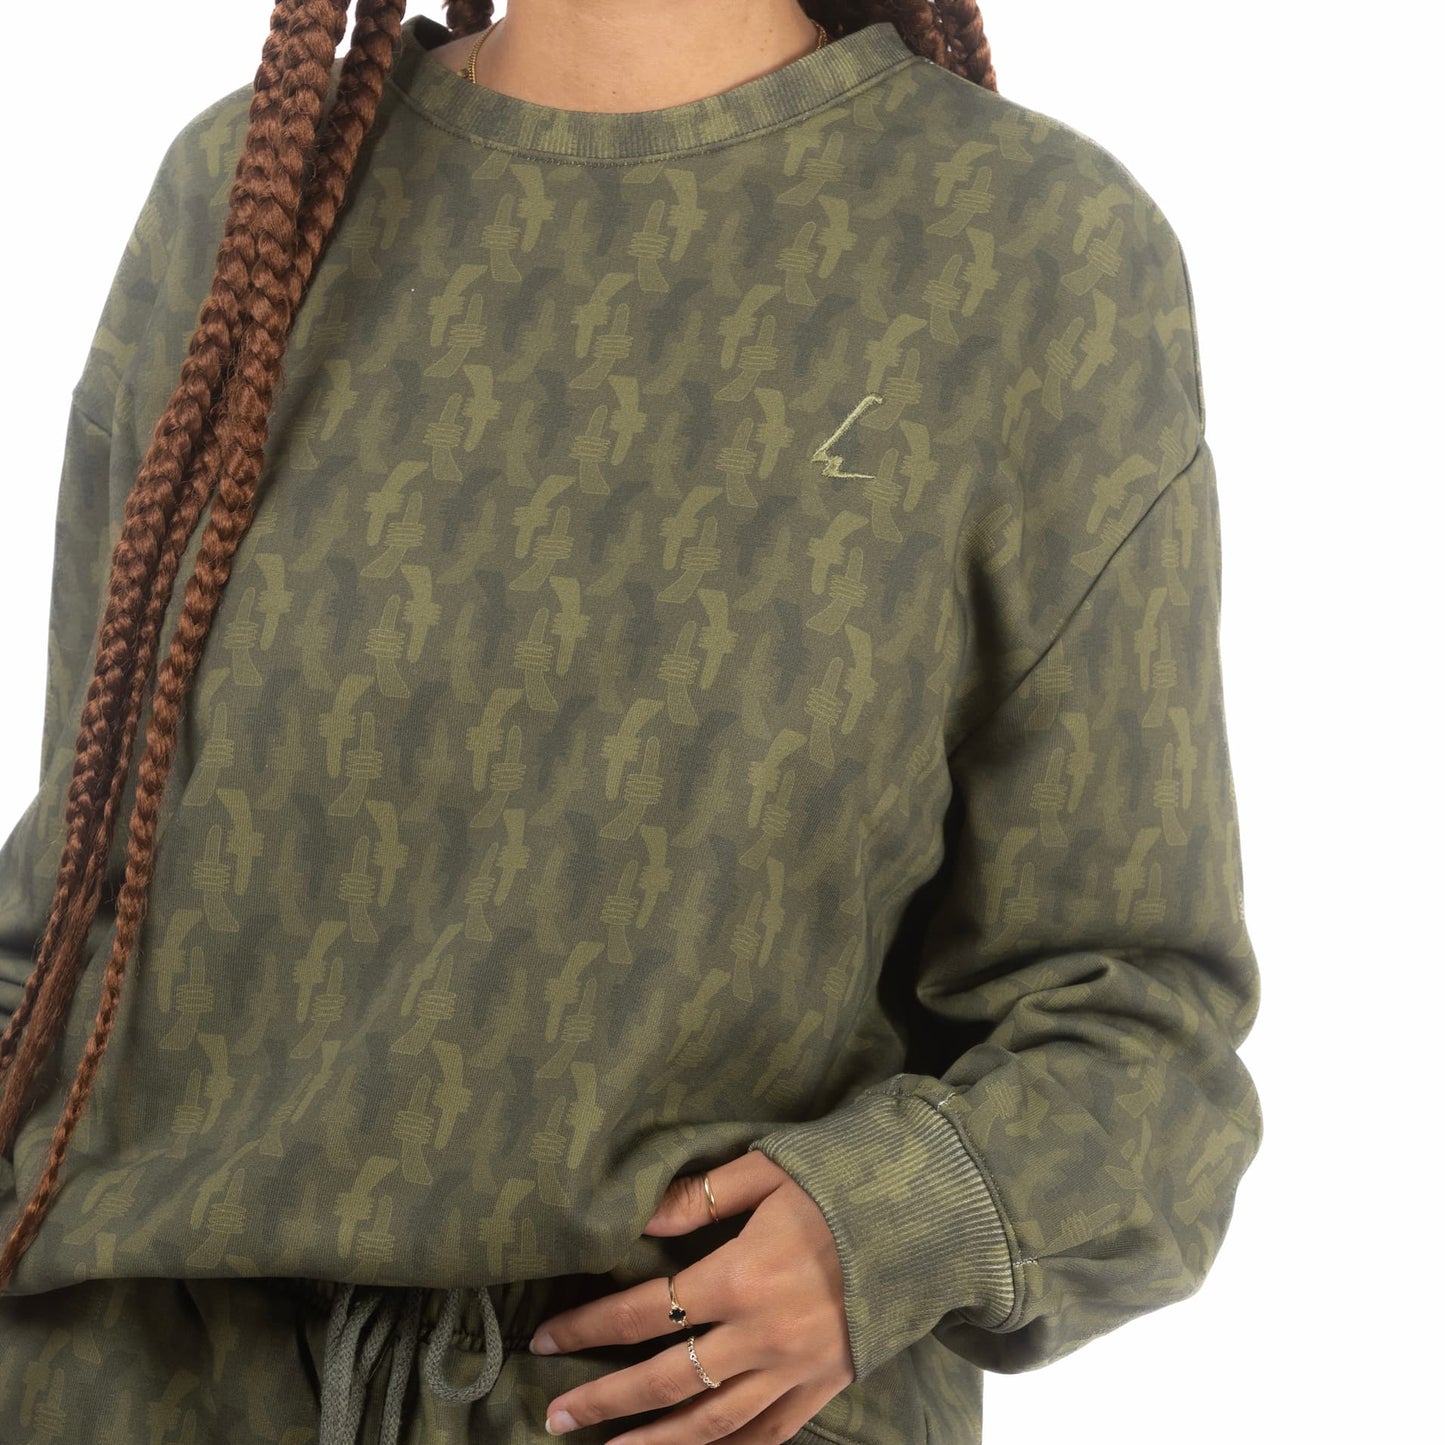 lucewear: femme portant un sweatshirt imprimé kaki